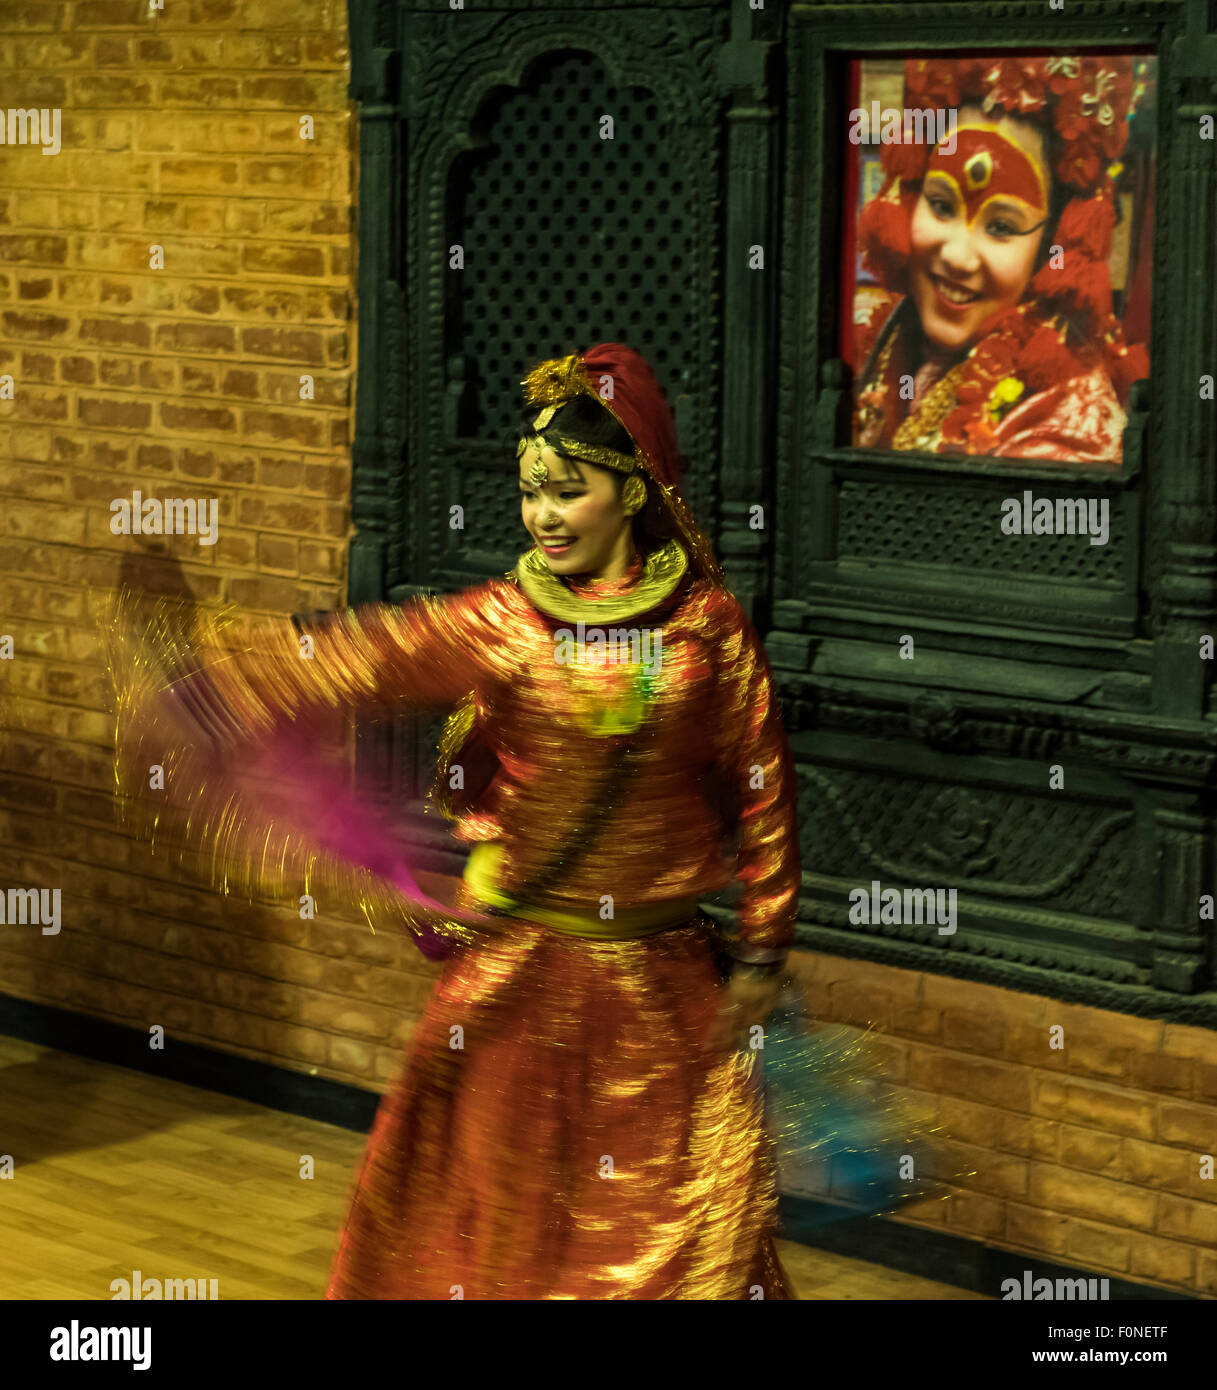 Tanz-Darsteller tanzen in lokalen Restaurant Kathmandu-Nepal Stockfoto